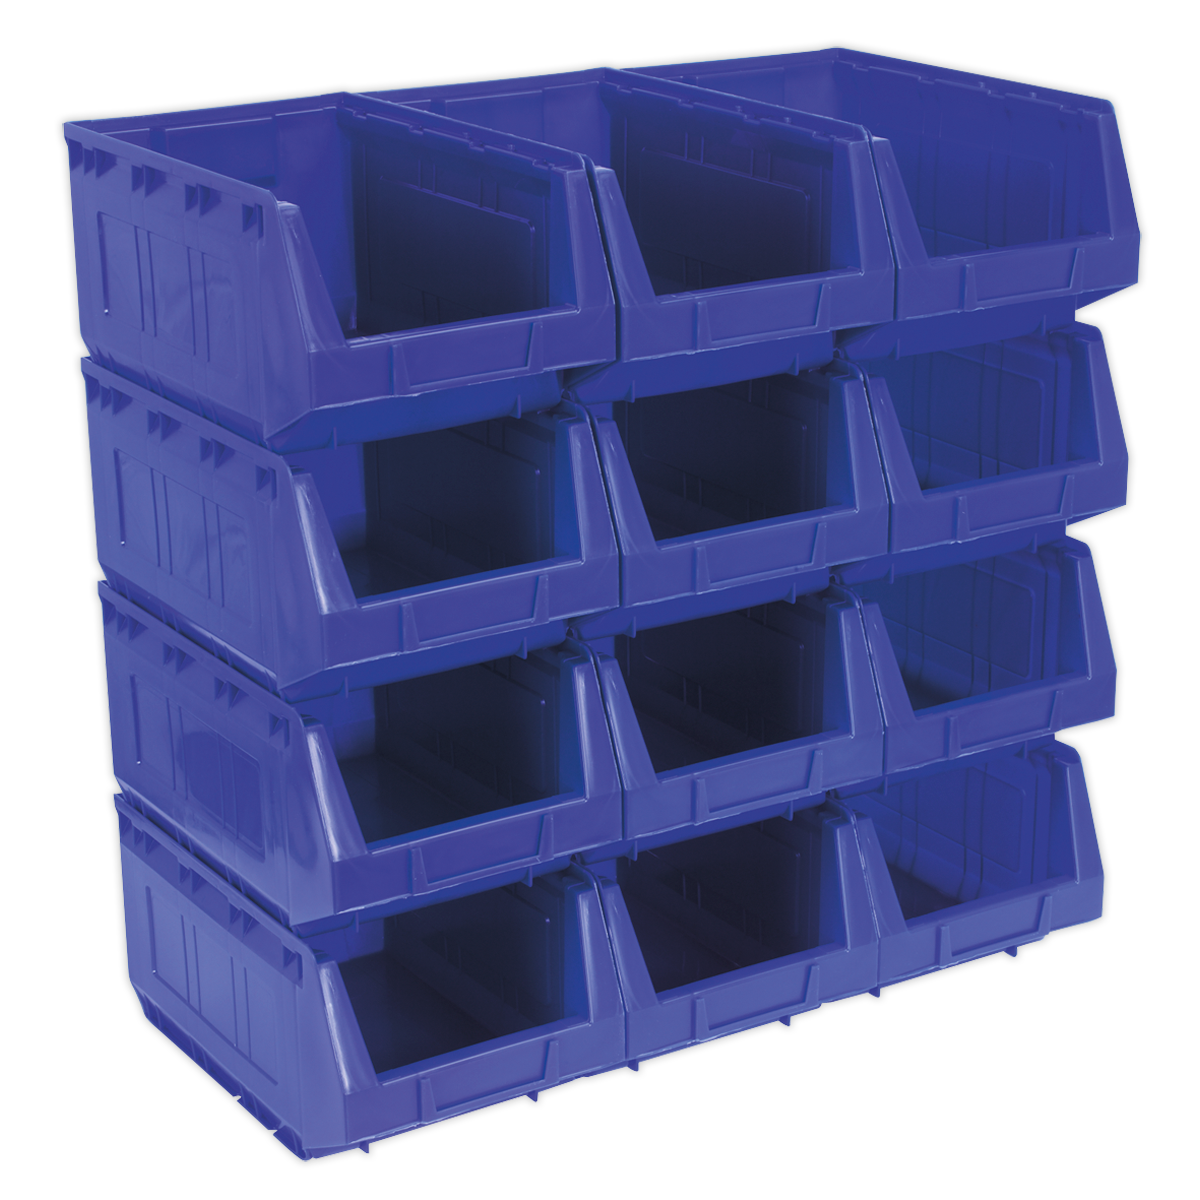 Sealey Plastic Storage Bin 210 x 355 x 165mm - Blue Pack of 12